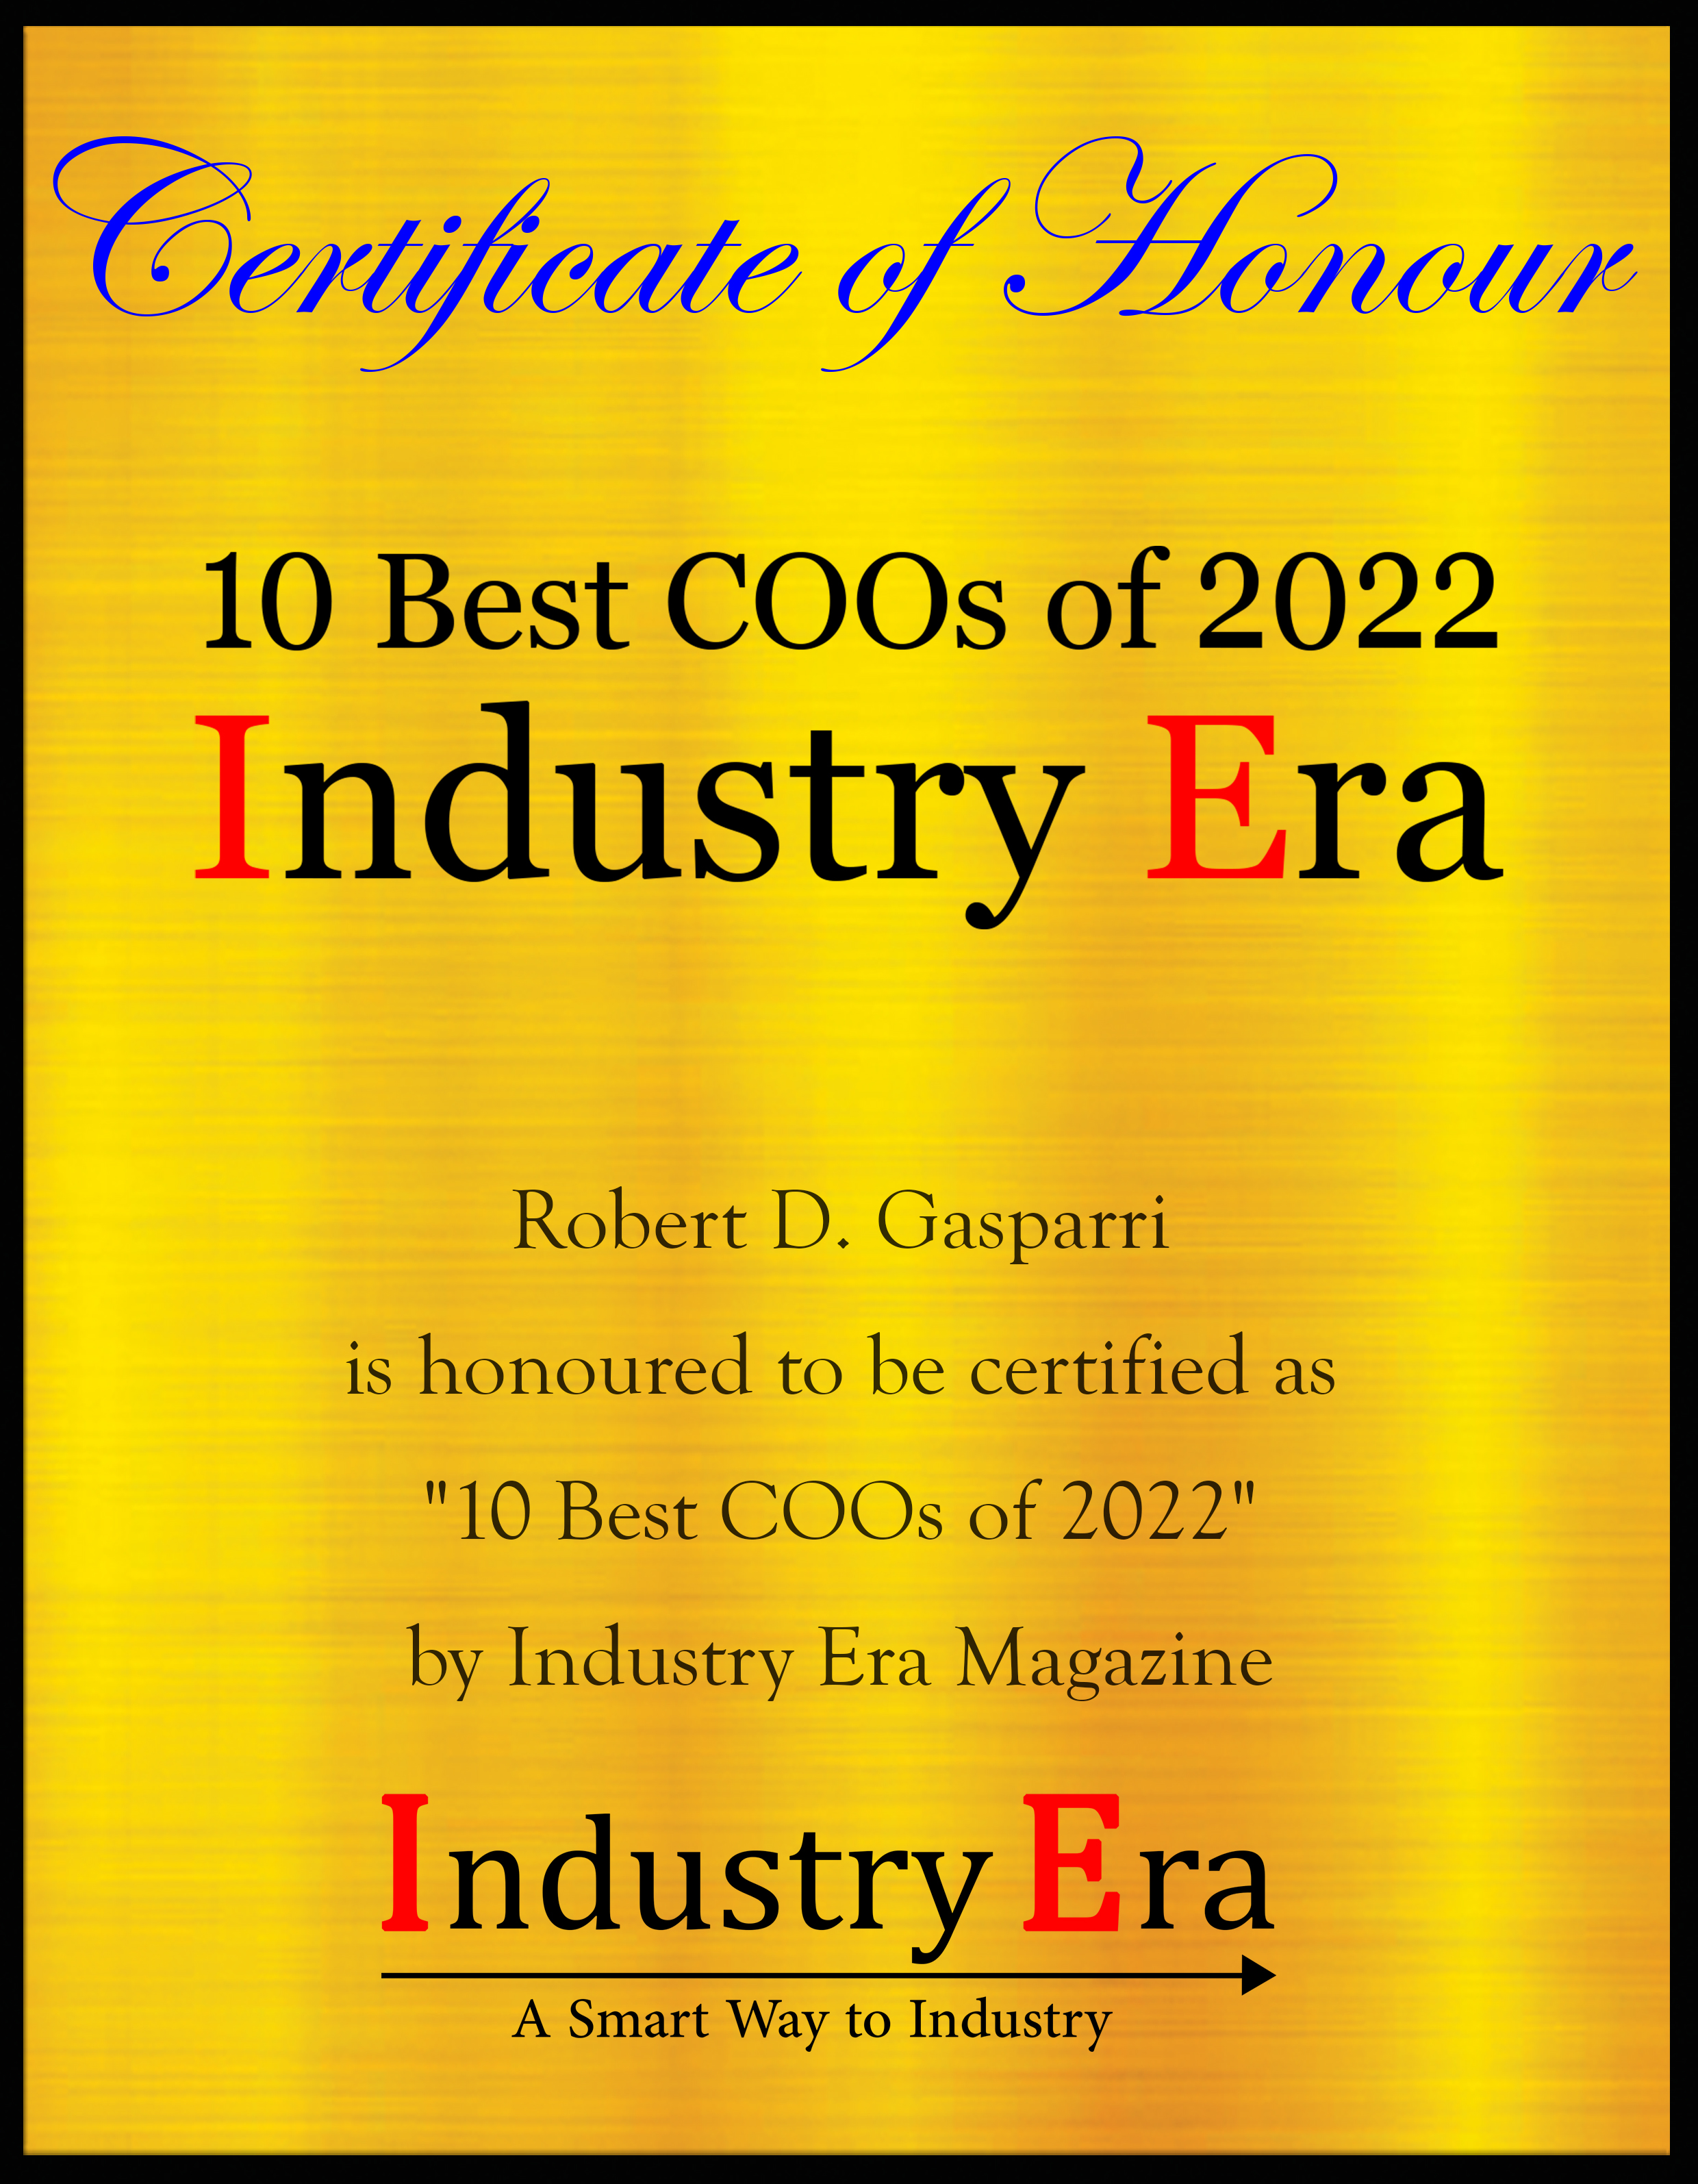 Robert D. Gasparri, COO of Golden Boy Promotions Certificate